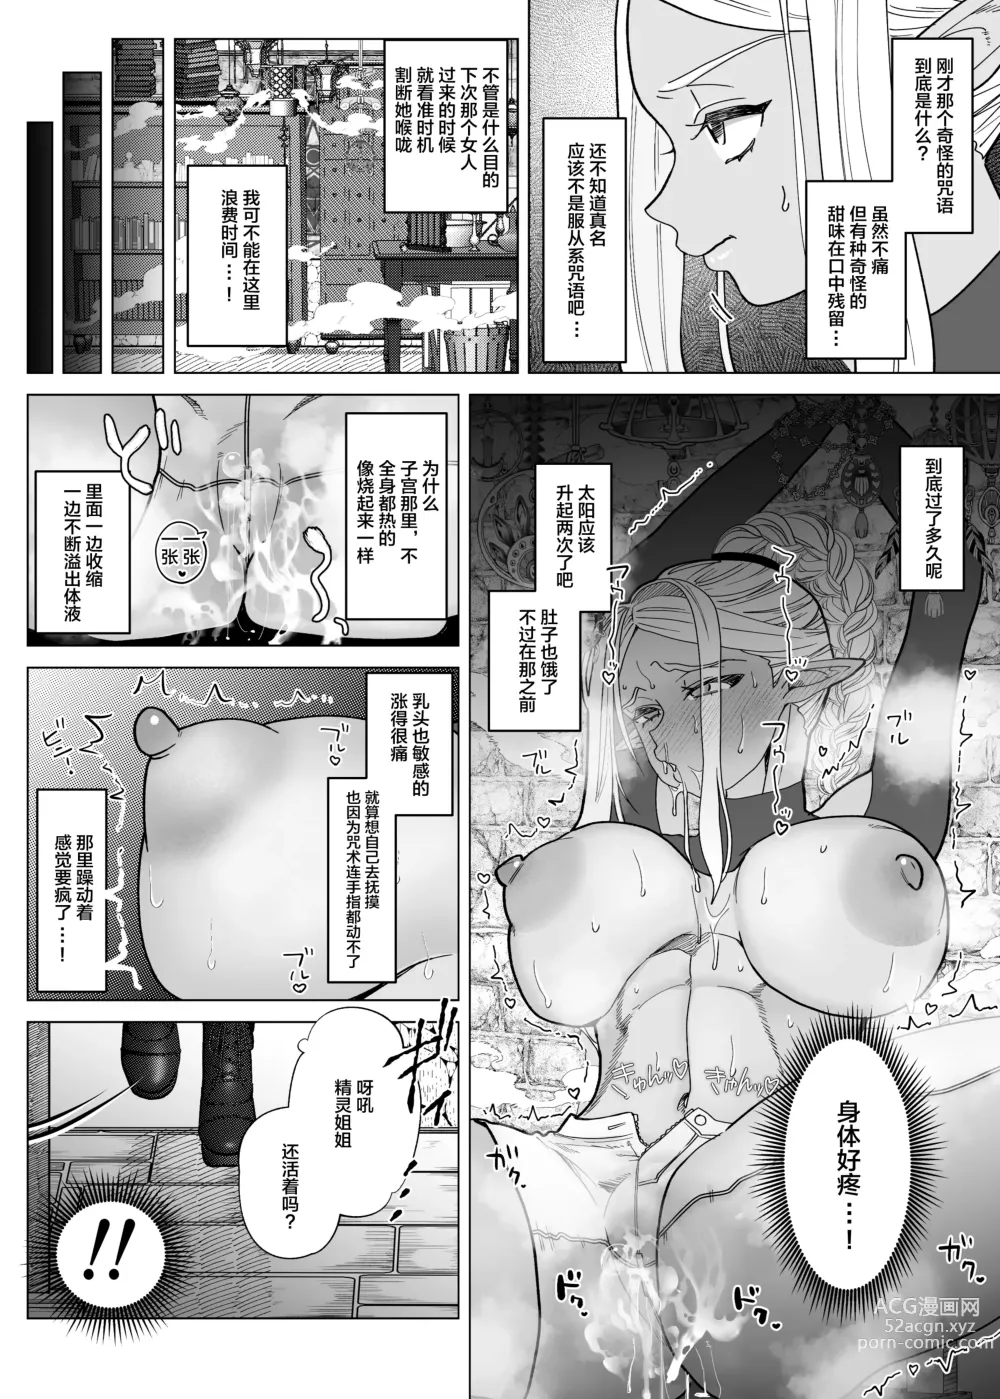 Page 11 of doujinshi Rakuhaku